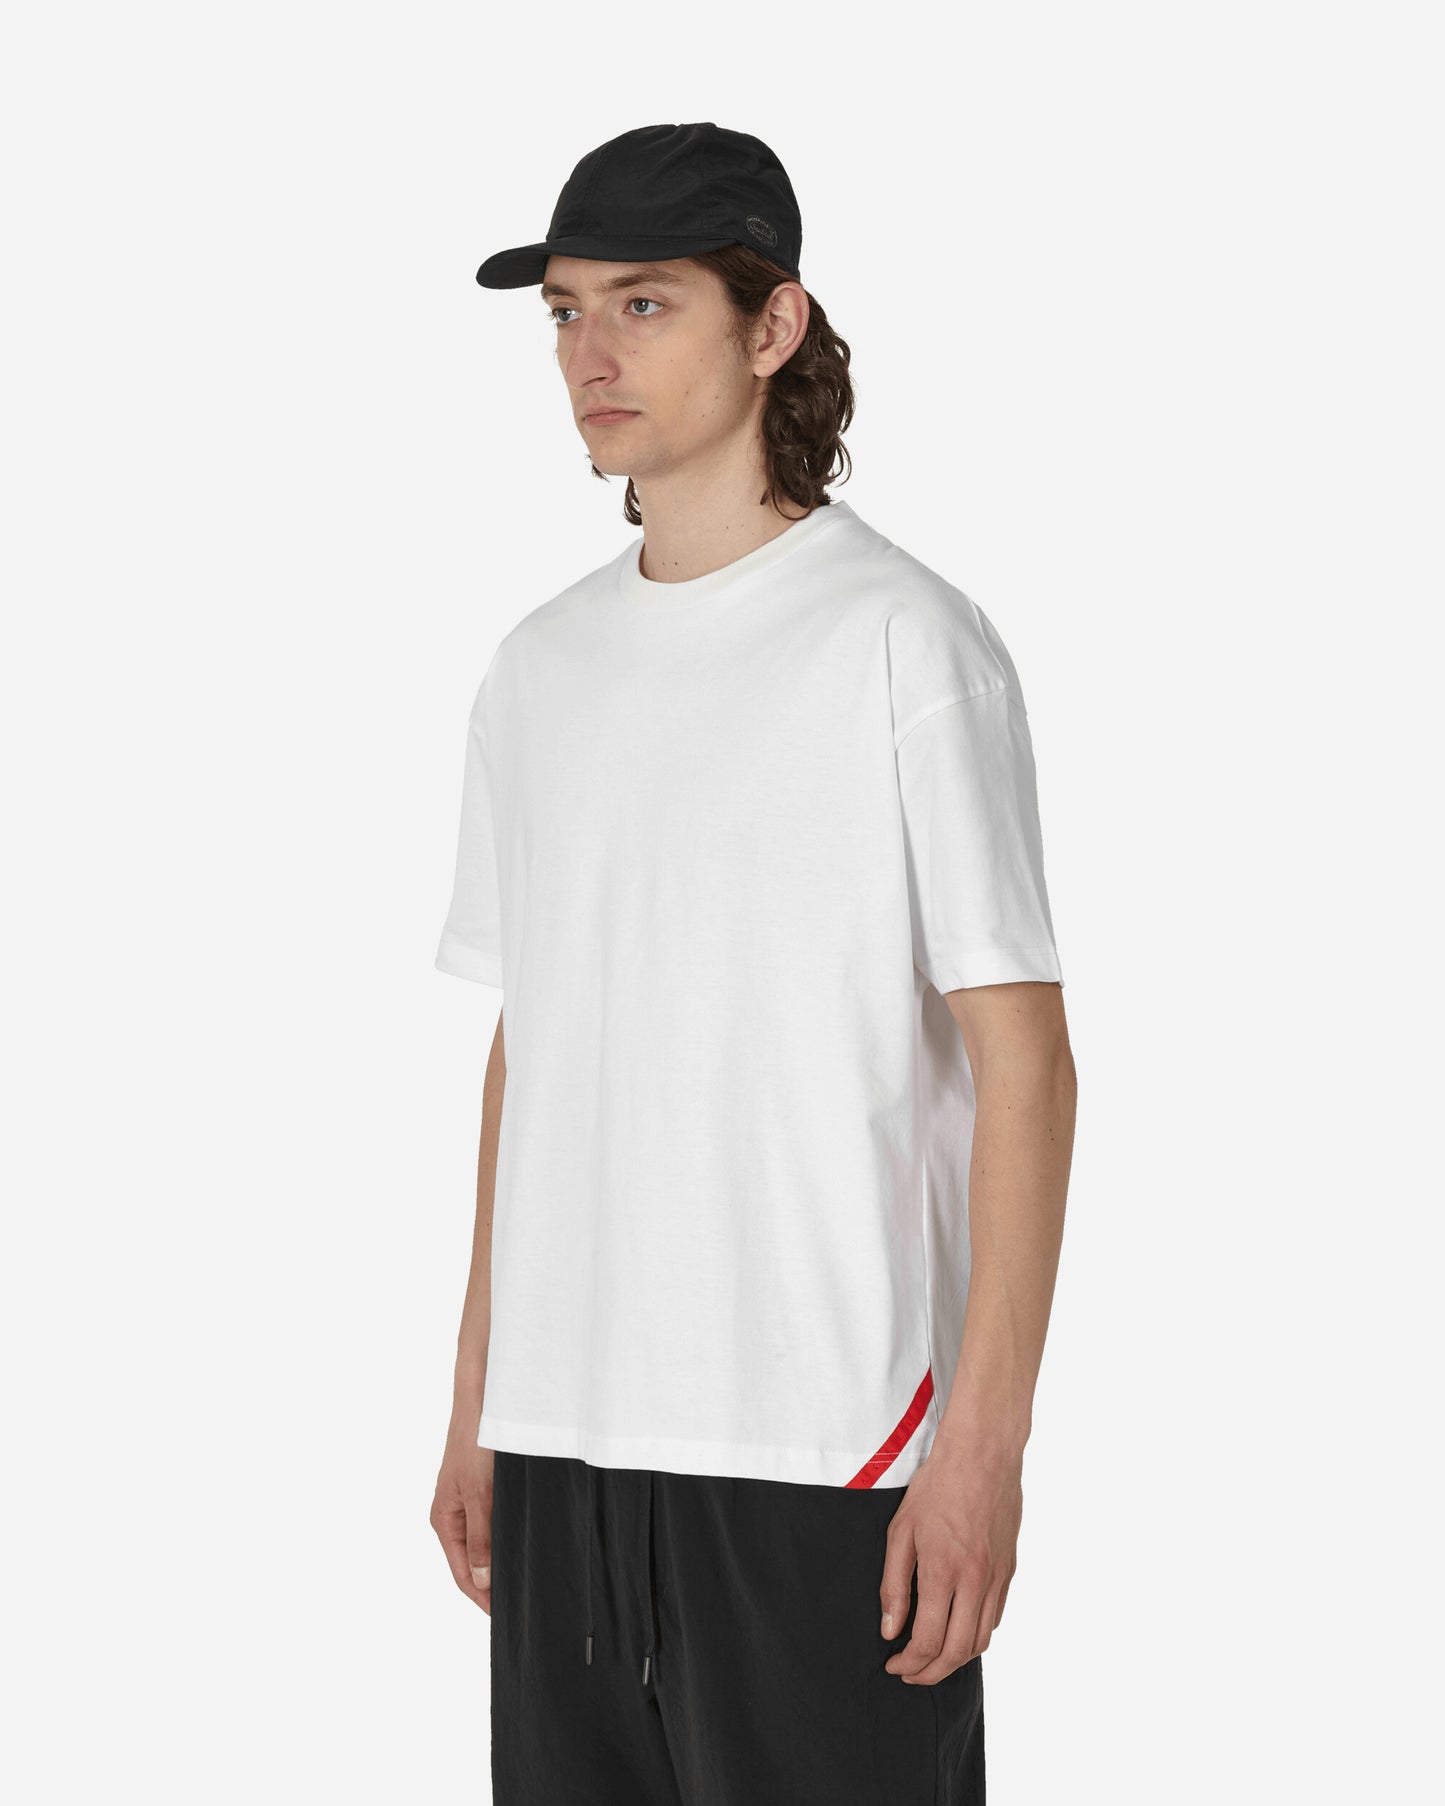 Phingerin Heavy Soft Tee White T-Shirts Shortsleeve PD-231-CS-111 A